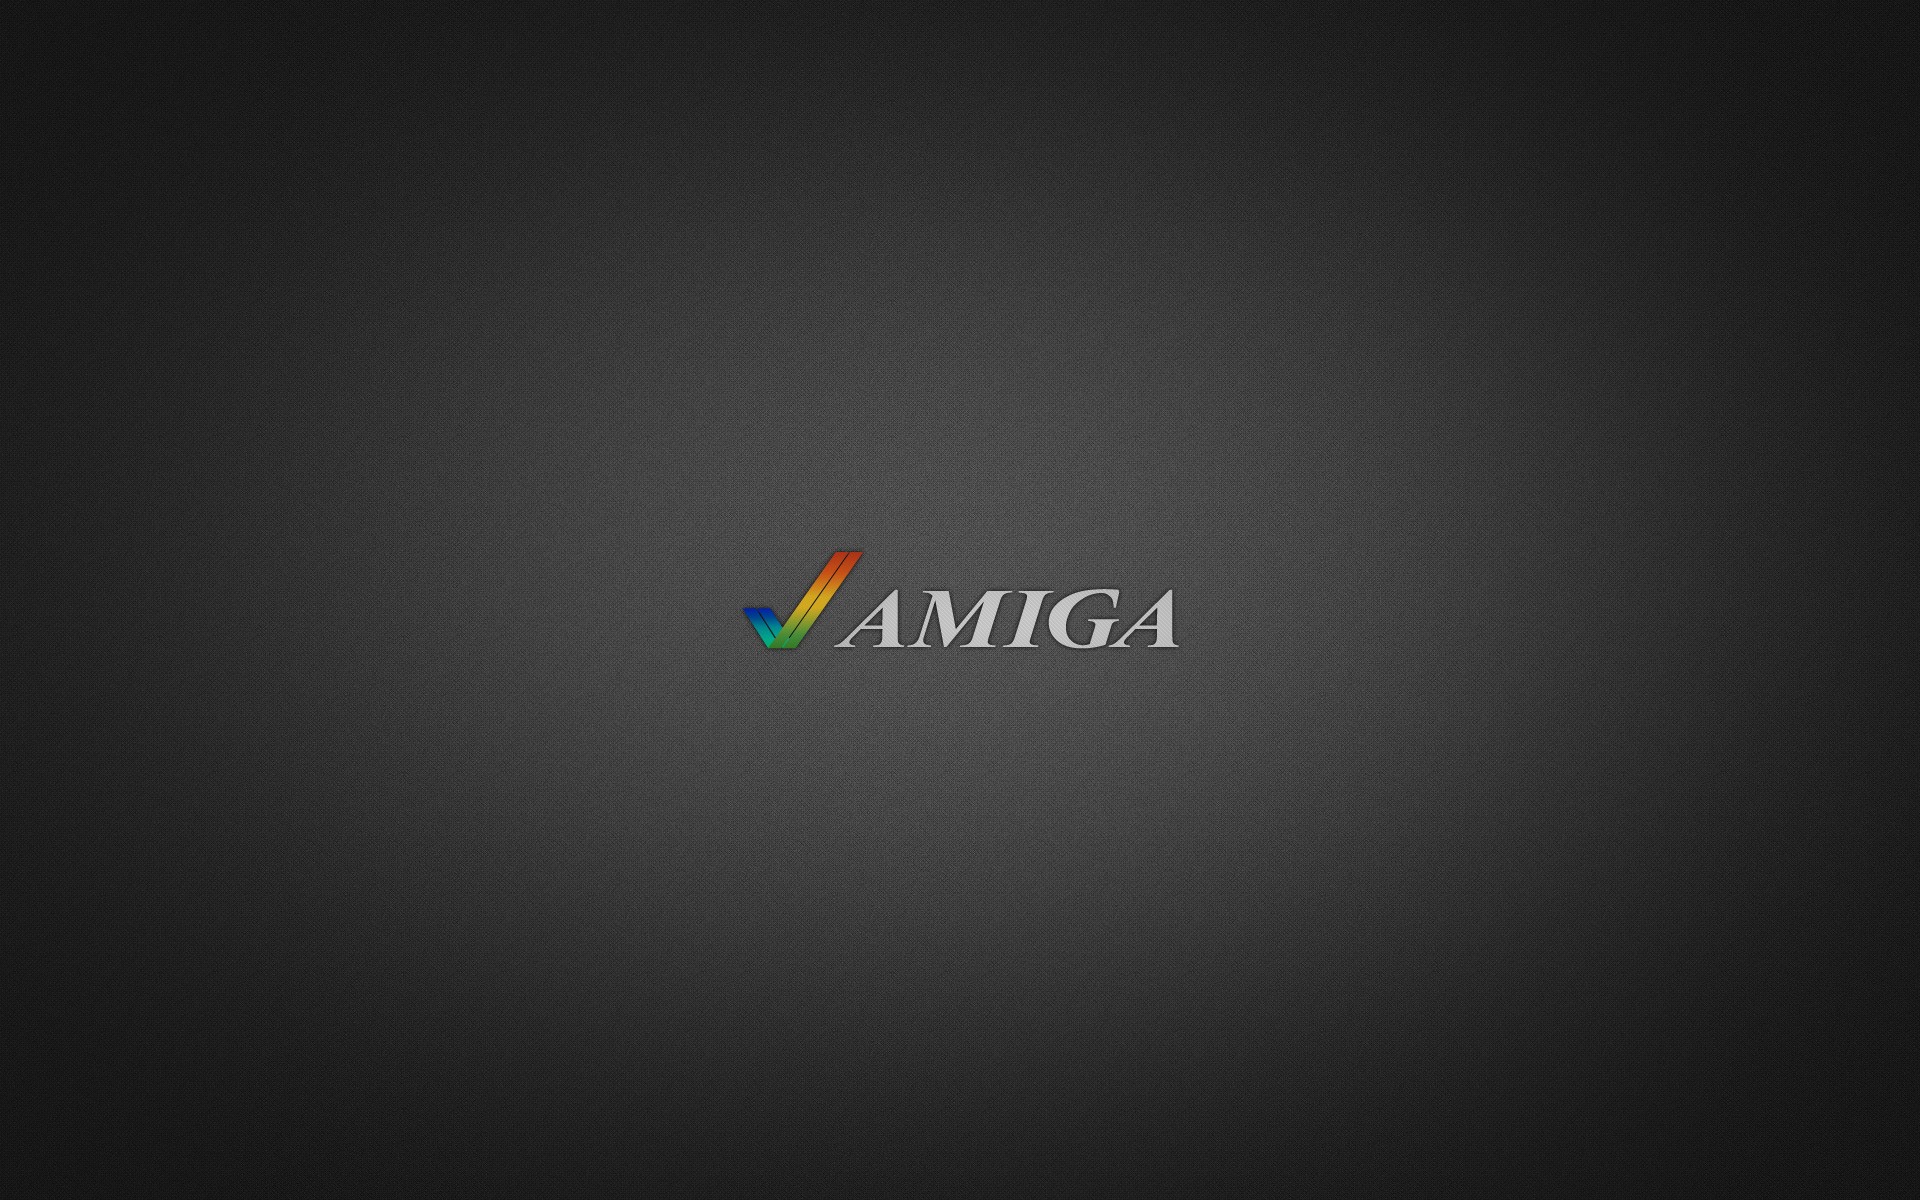 General 1920x1200 Amiga Commodore simple background computer Retro computers DeviantArt gray background texture logo technology